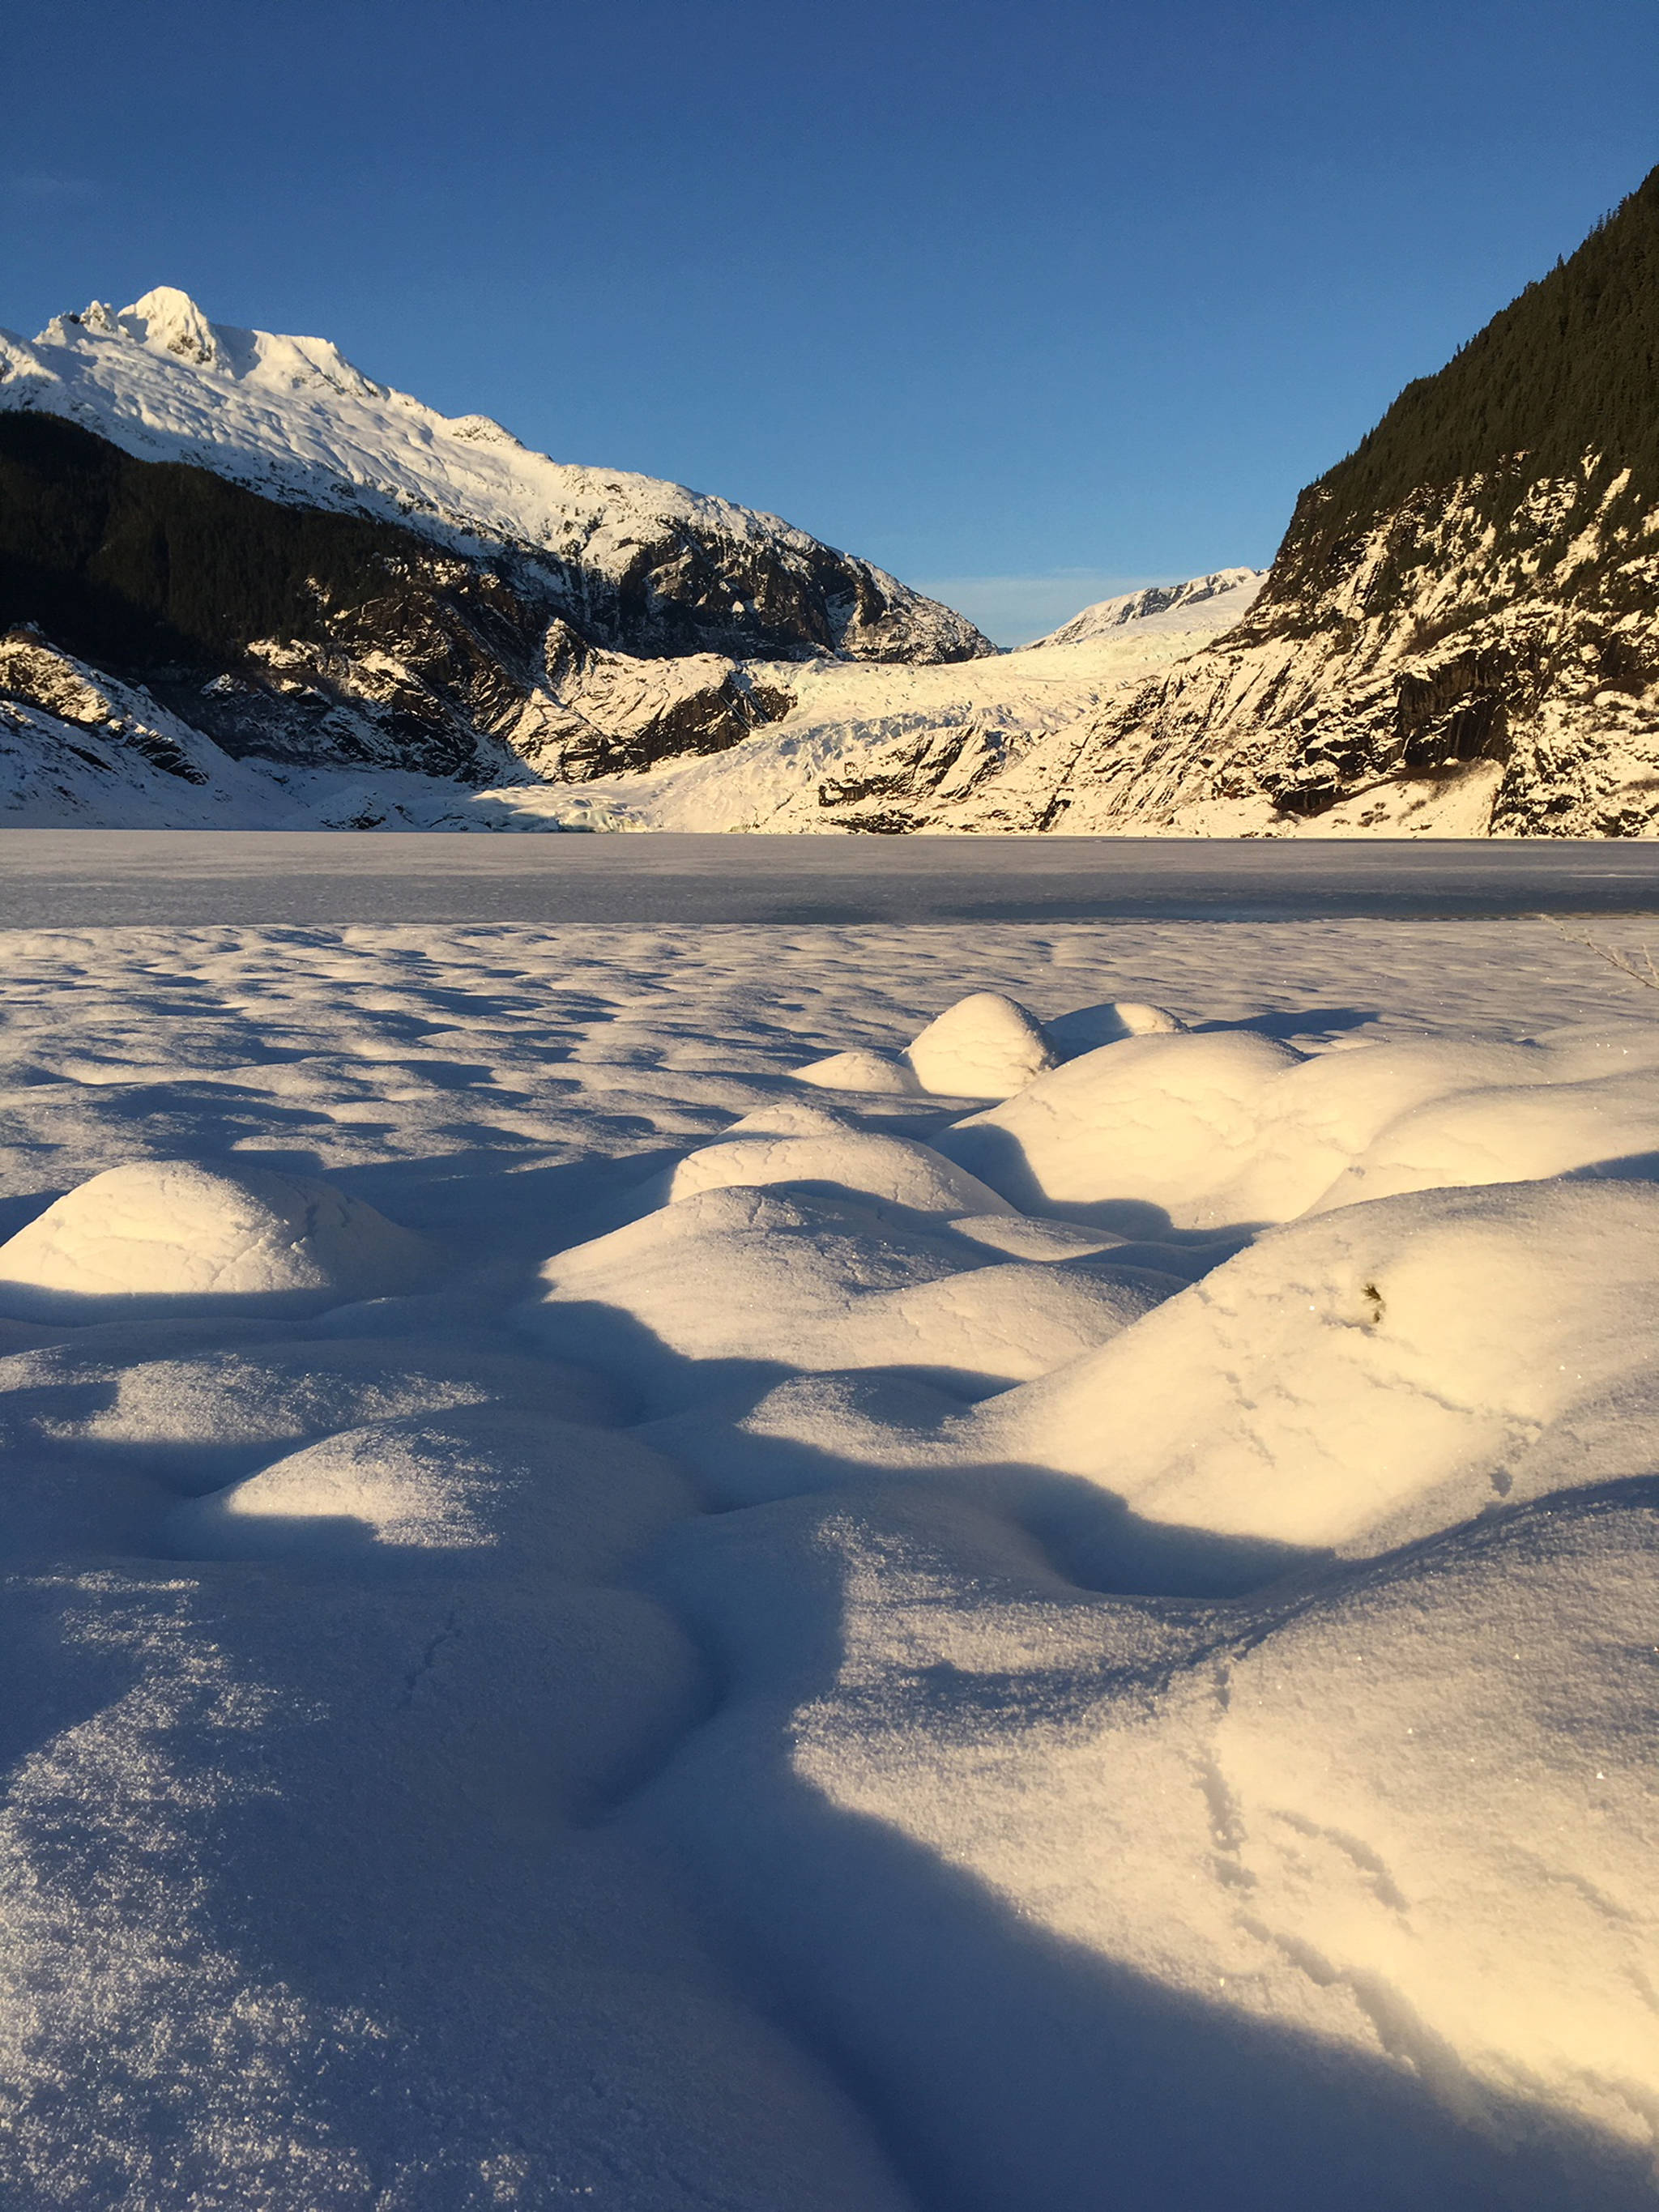 A snowy view of the Mendenhall Glacier. (Courtesy Photo | Deborah Rudis)